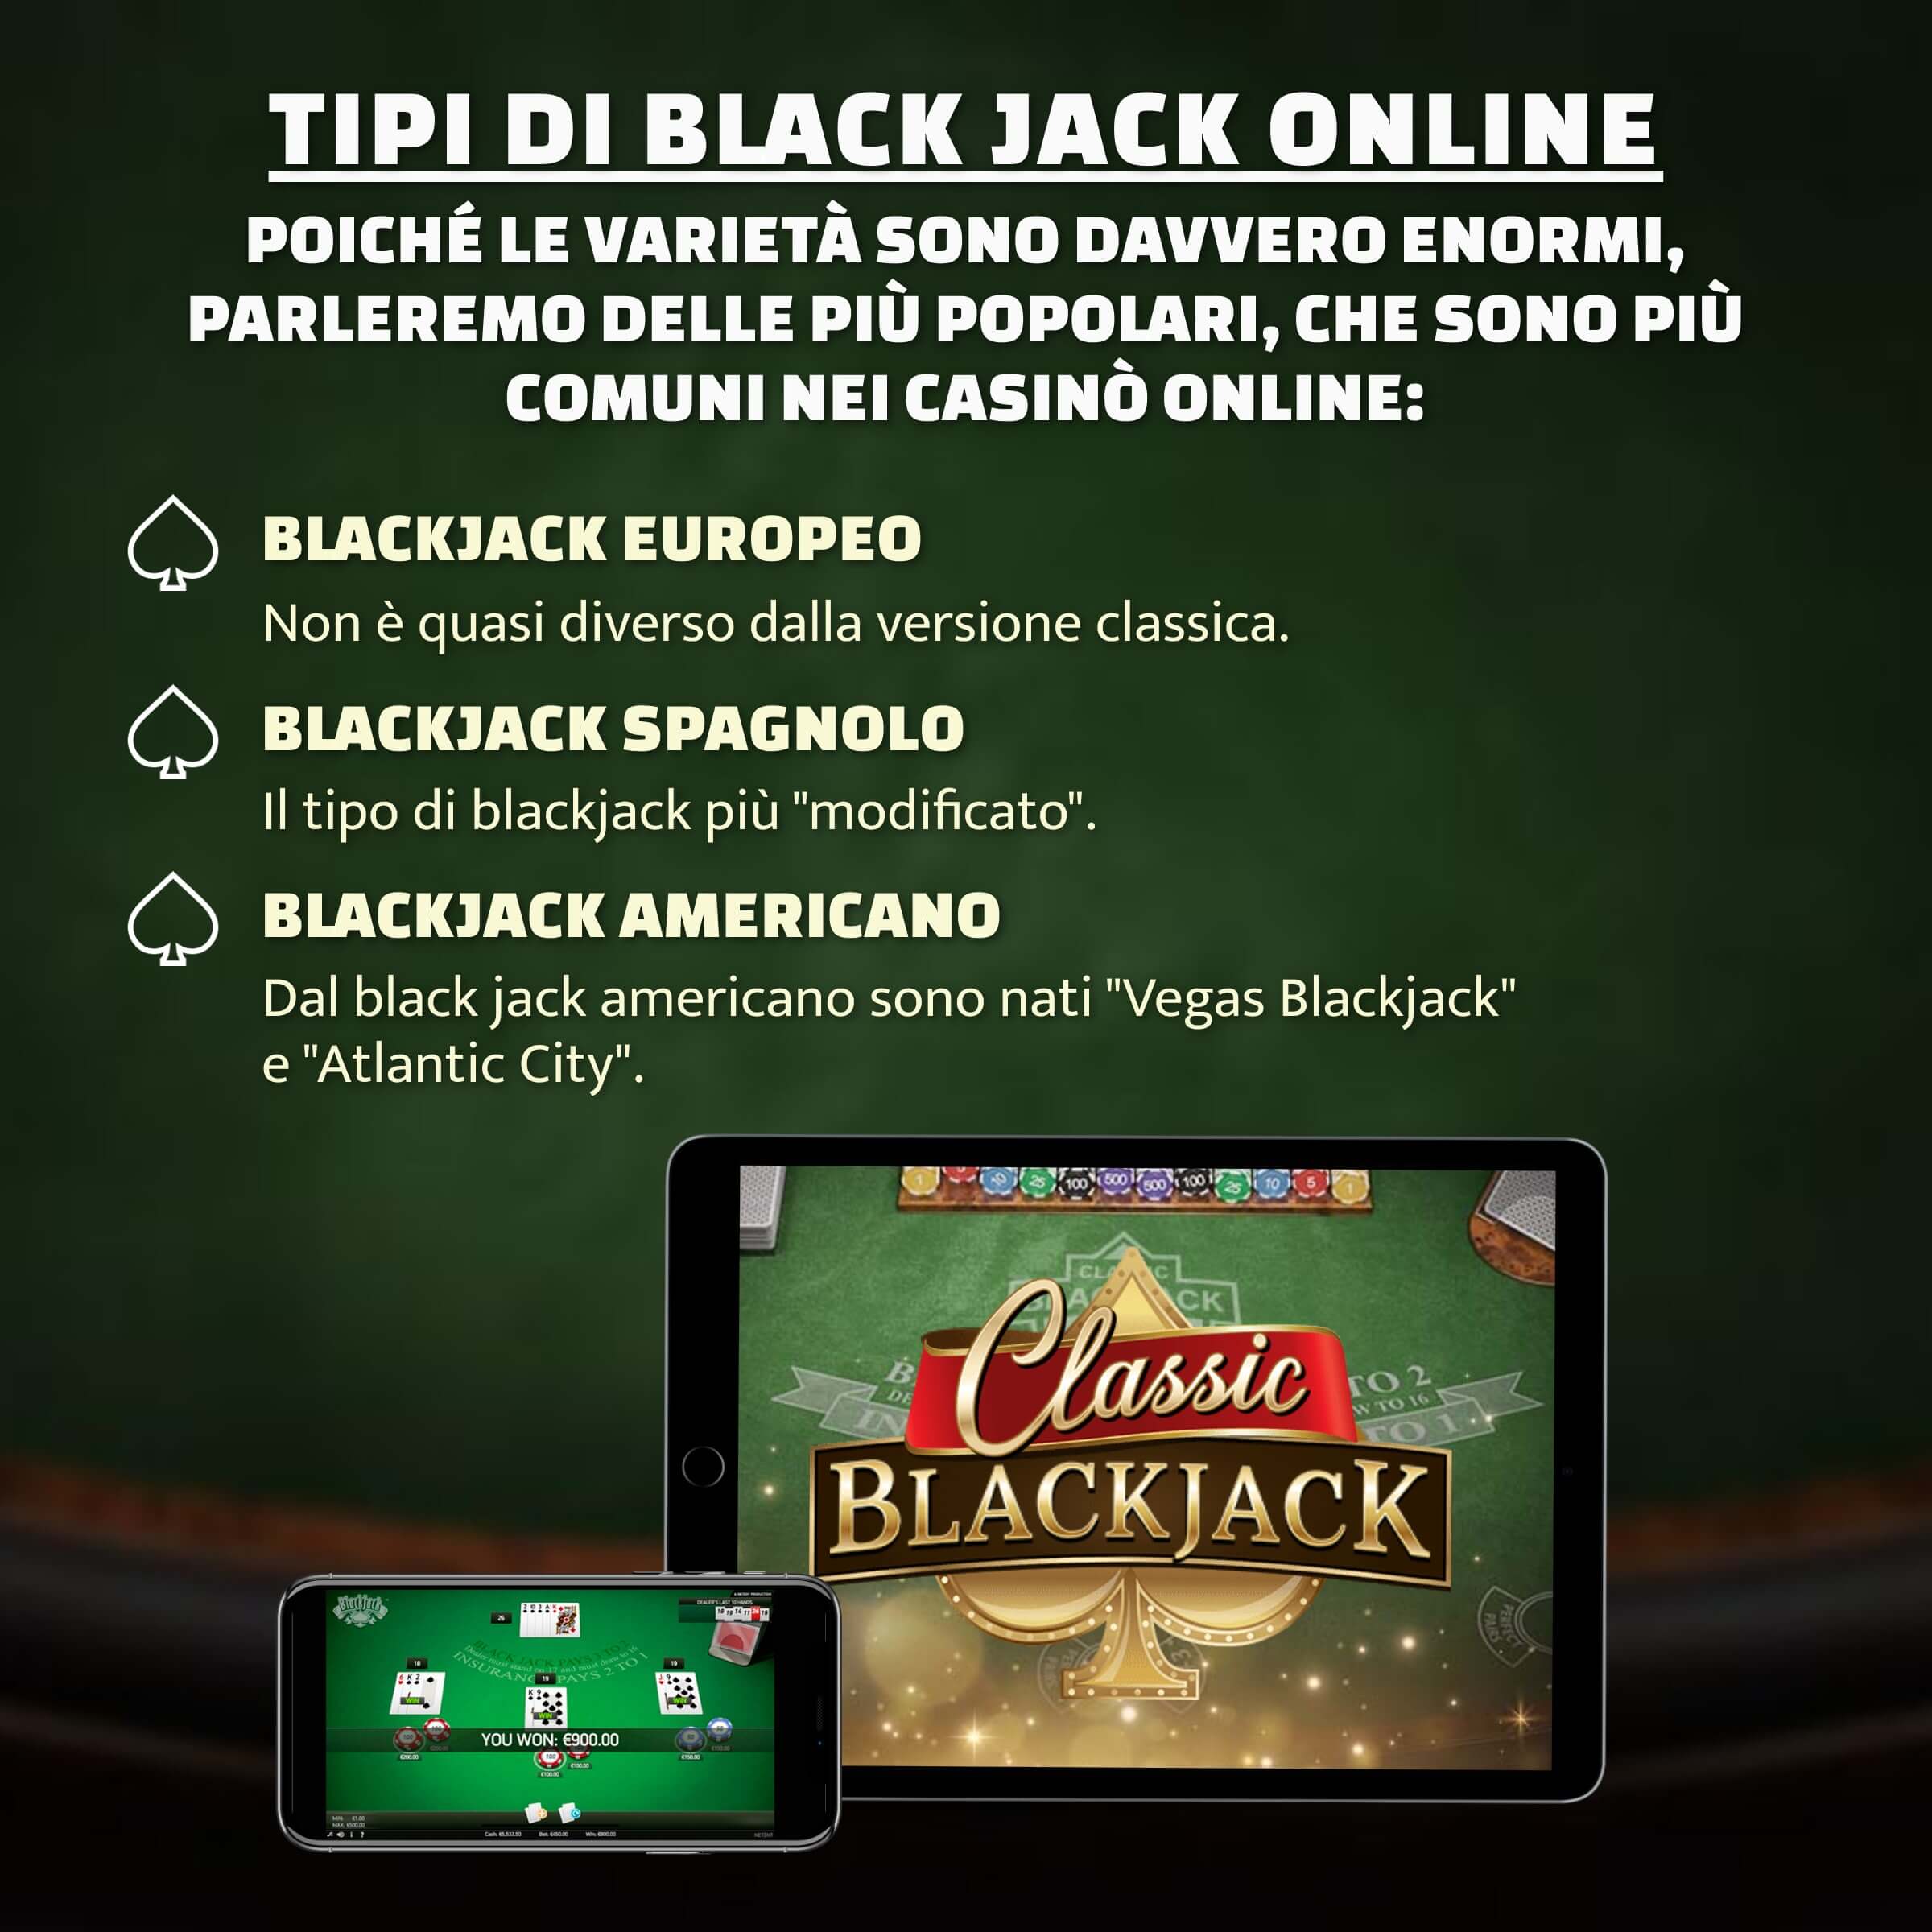 tipi di blackjack online